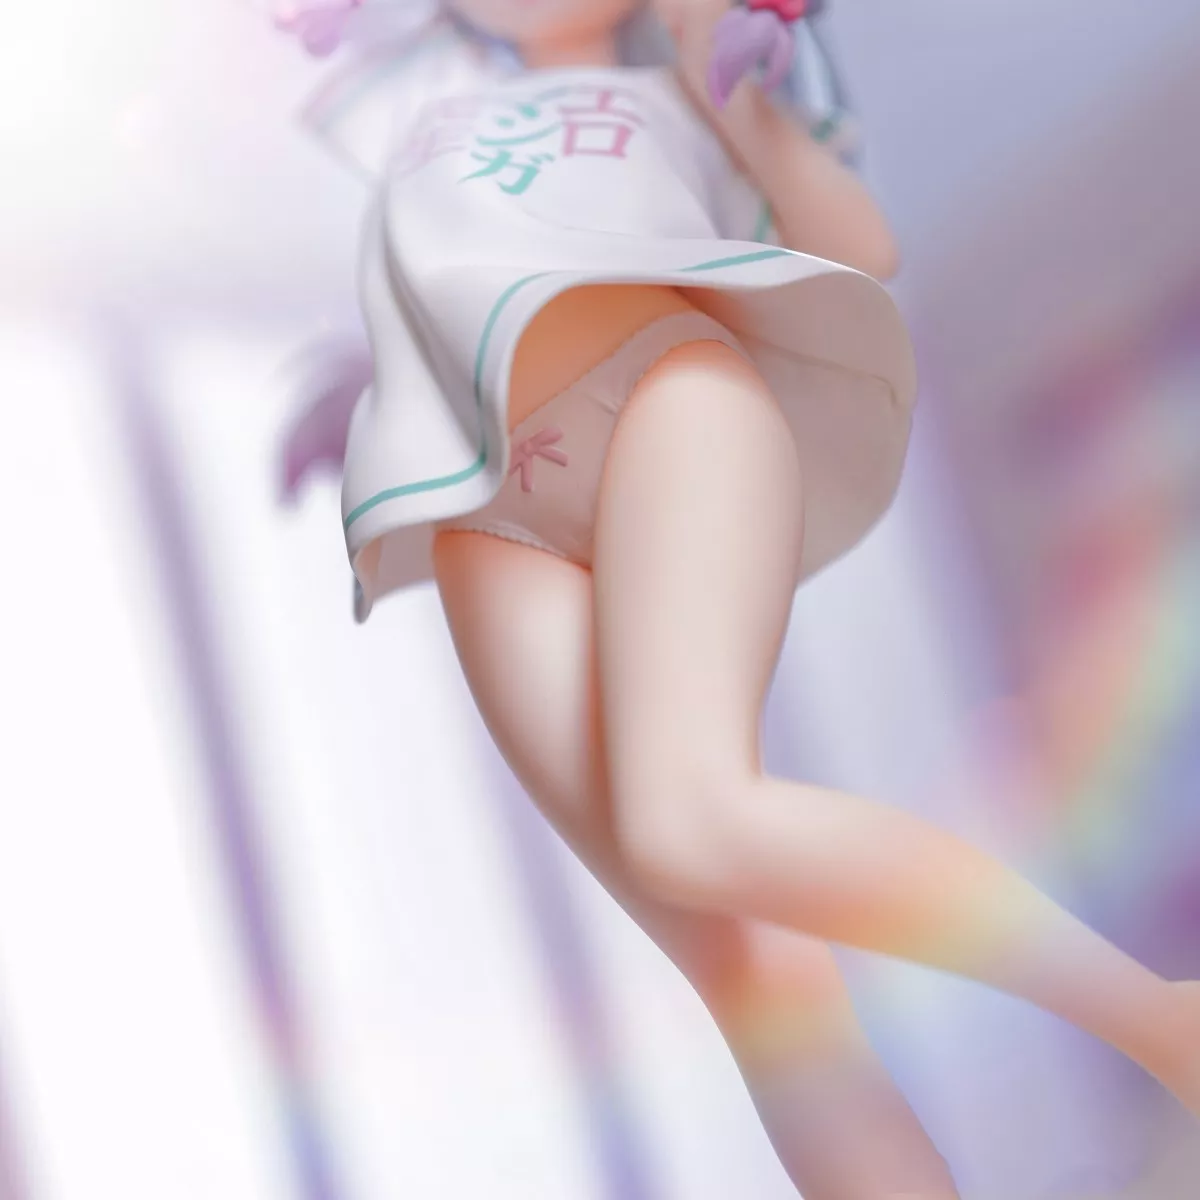 677053180 Action Figure Eromanga Sensei Anime 24cm sagiri izumi final modo meruru camiseta ver. Pvc figura de ação brinquedo sagiri izumi figura sexy